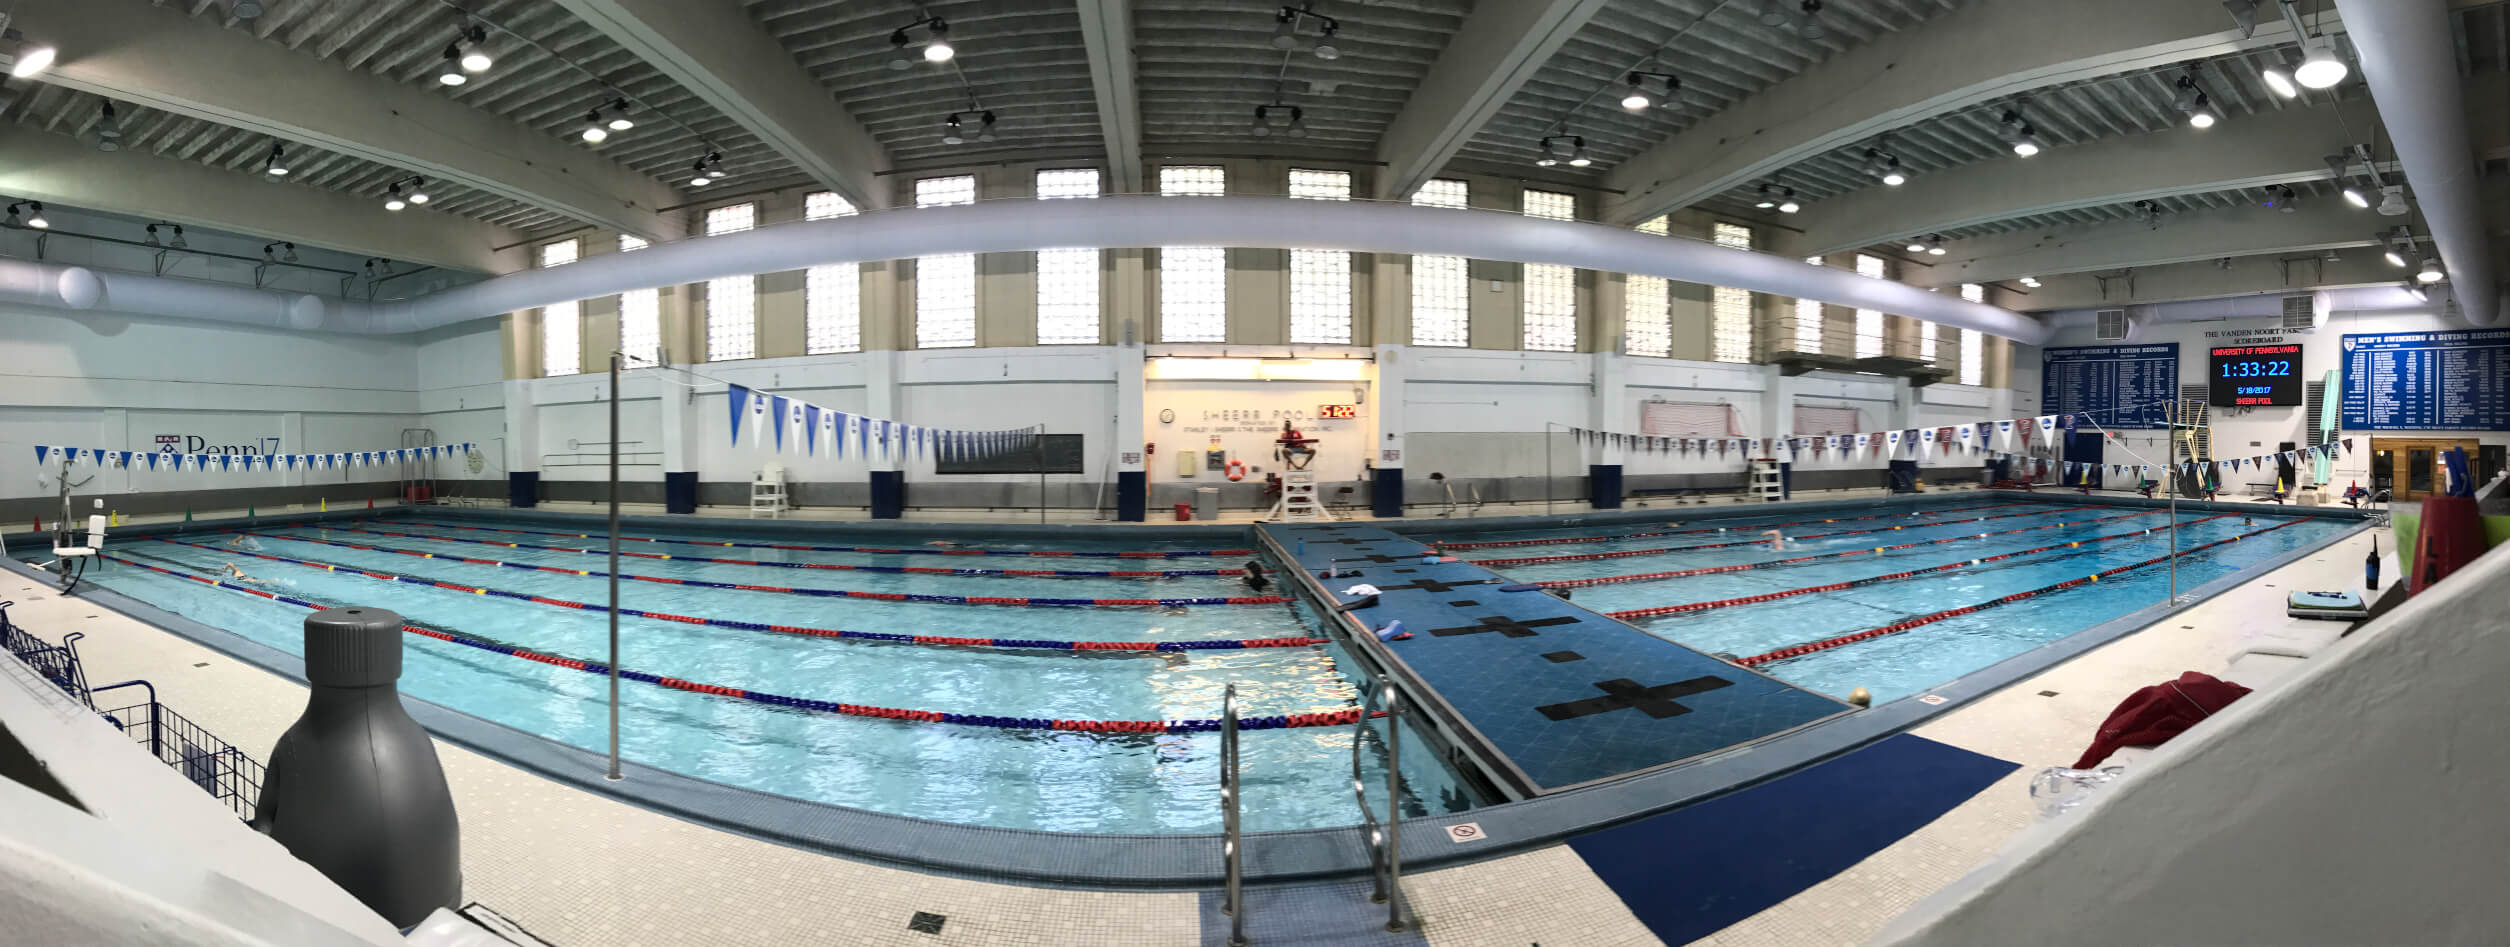 Sheerr Pool, University of Pennsylvania